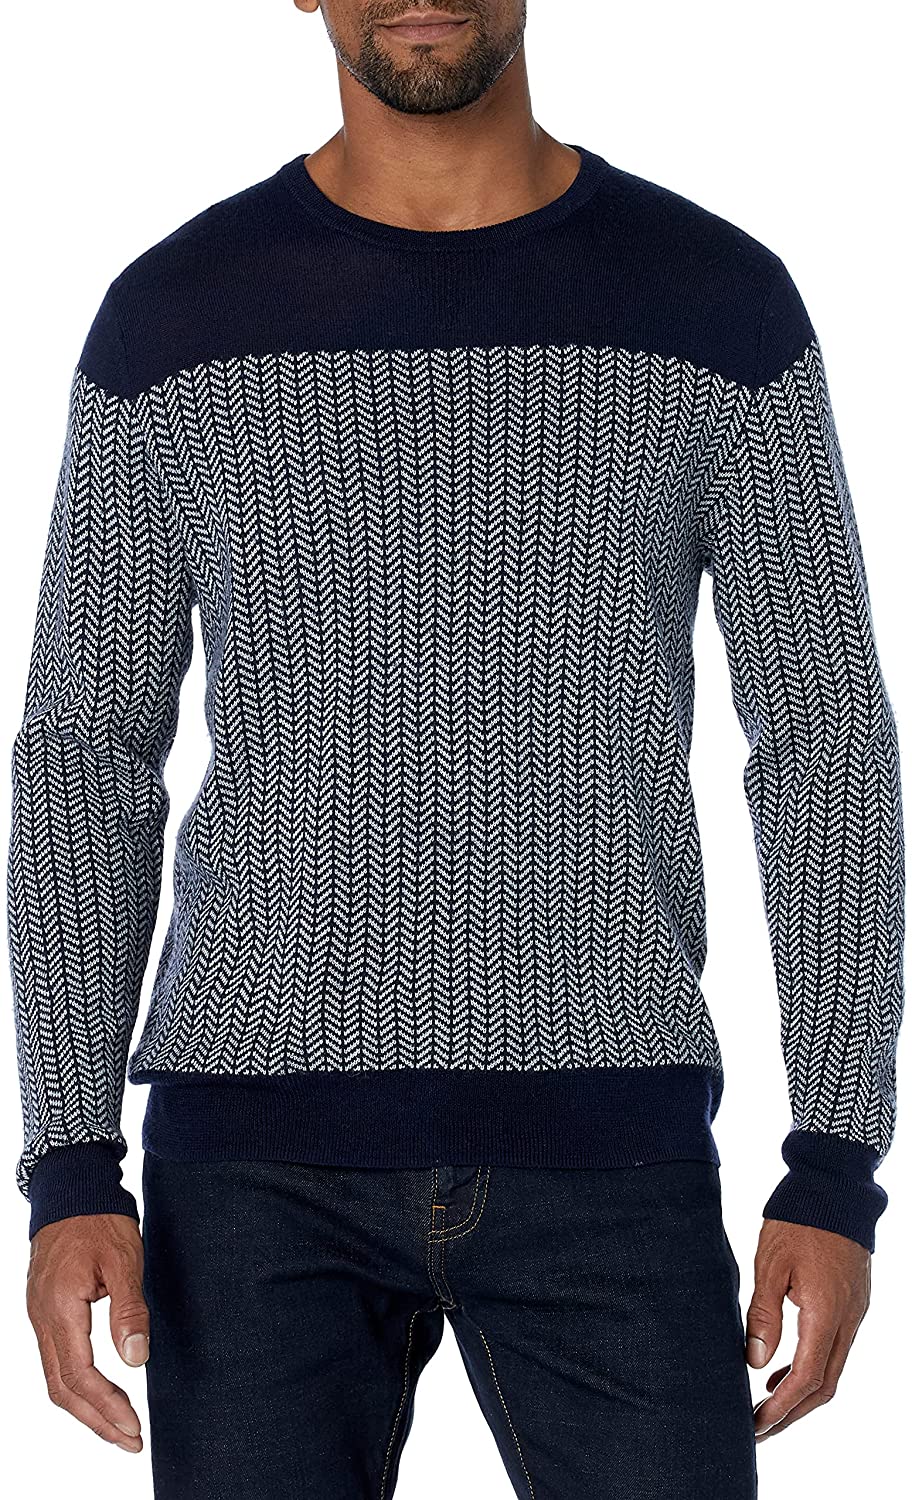 Brand Goodthreads Mens Lightweight Merino Wool/Acrylic Turtleneck Sweater 